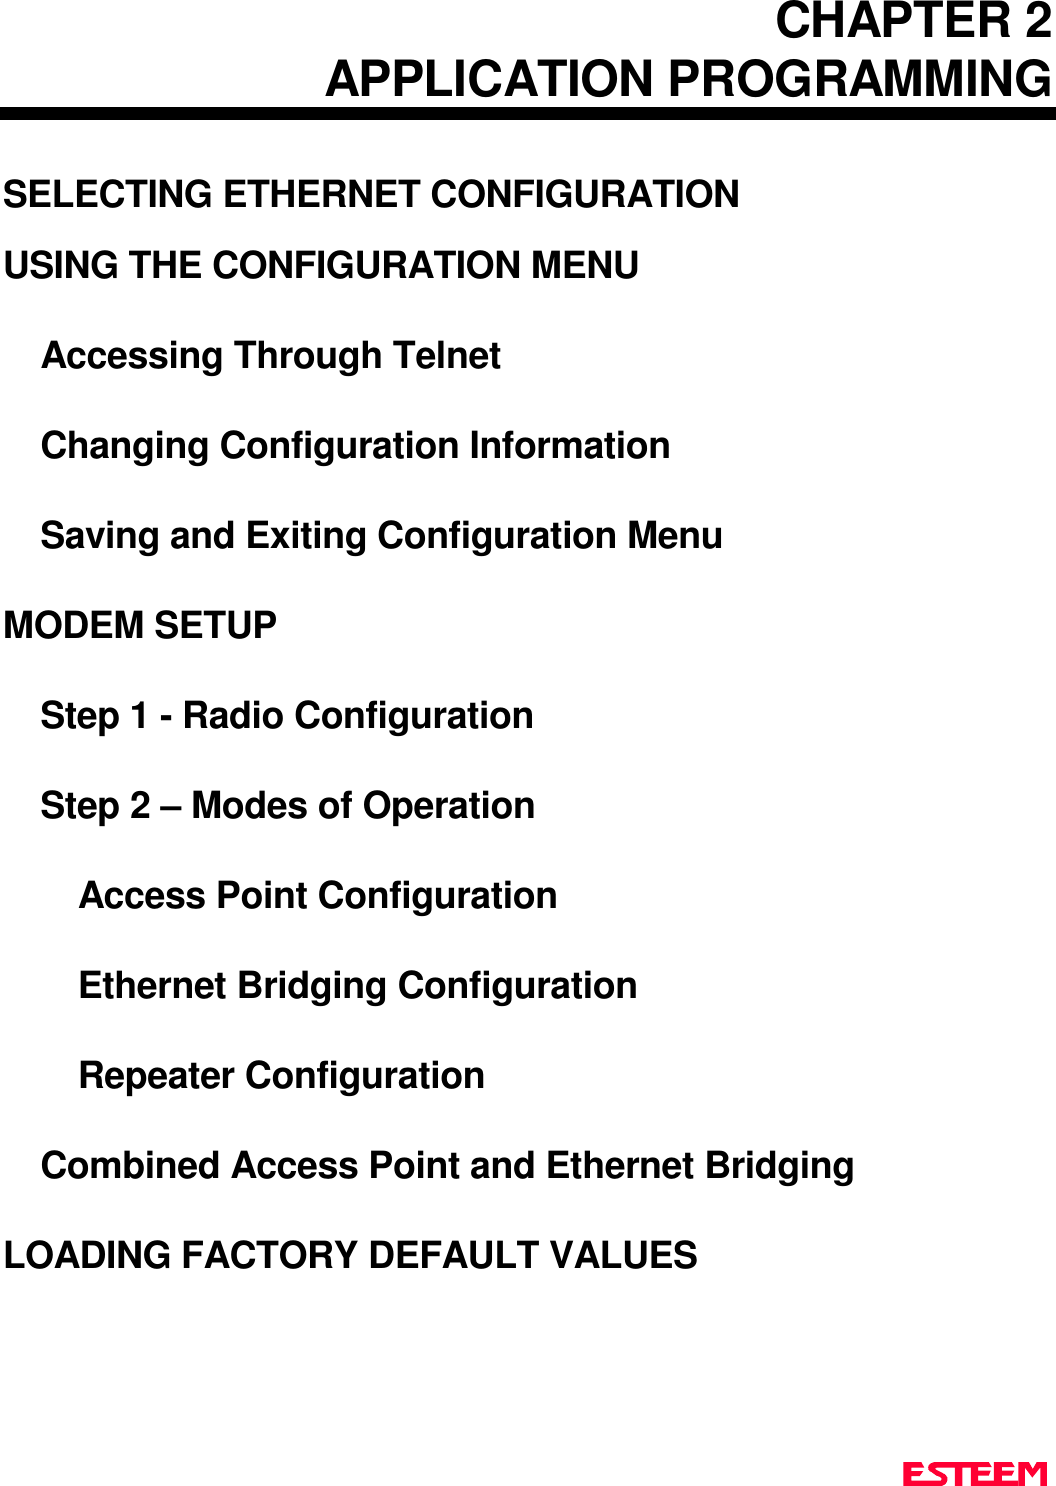 CHAPTER 2APPLICATION PROGRAMMINGSELECTING ETHERNET CONFIGURATIONUSING THE CONFIGURATION MENUAccessing Through TelnetChanging Configuration InformationSaving and Exiting Configuration MenuMODEM SETUPStep 1 - Radio ConfigurationStep 2 – Modes of OperationAccess Point ConfigurationEthernet Bridging ConfigurationRepeater ConfigurationCombined Access Point and Ethernet BridgingLOADING FACTORY DEFAULT VALUES